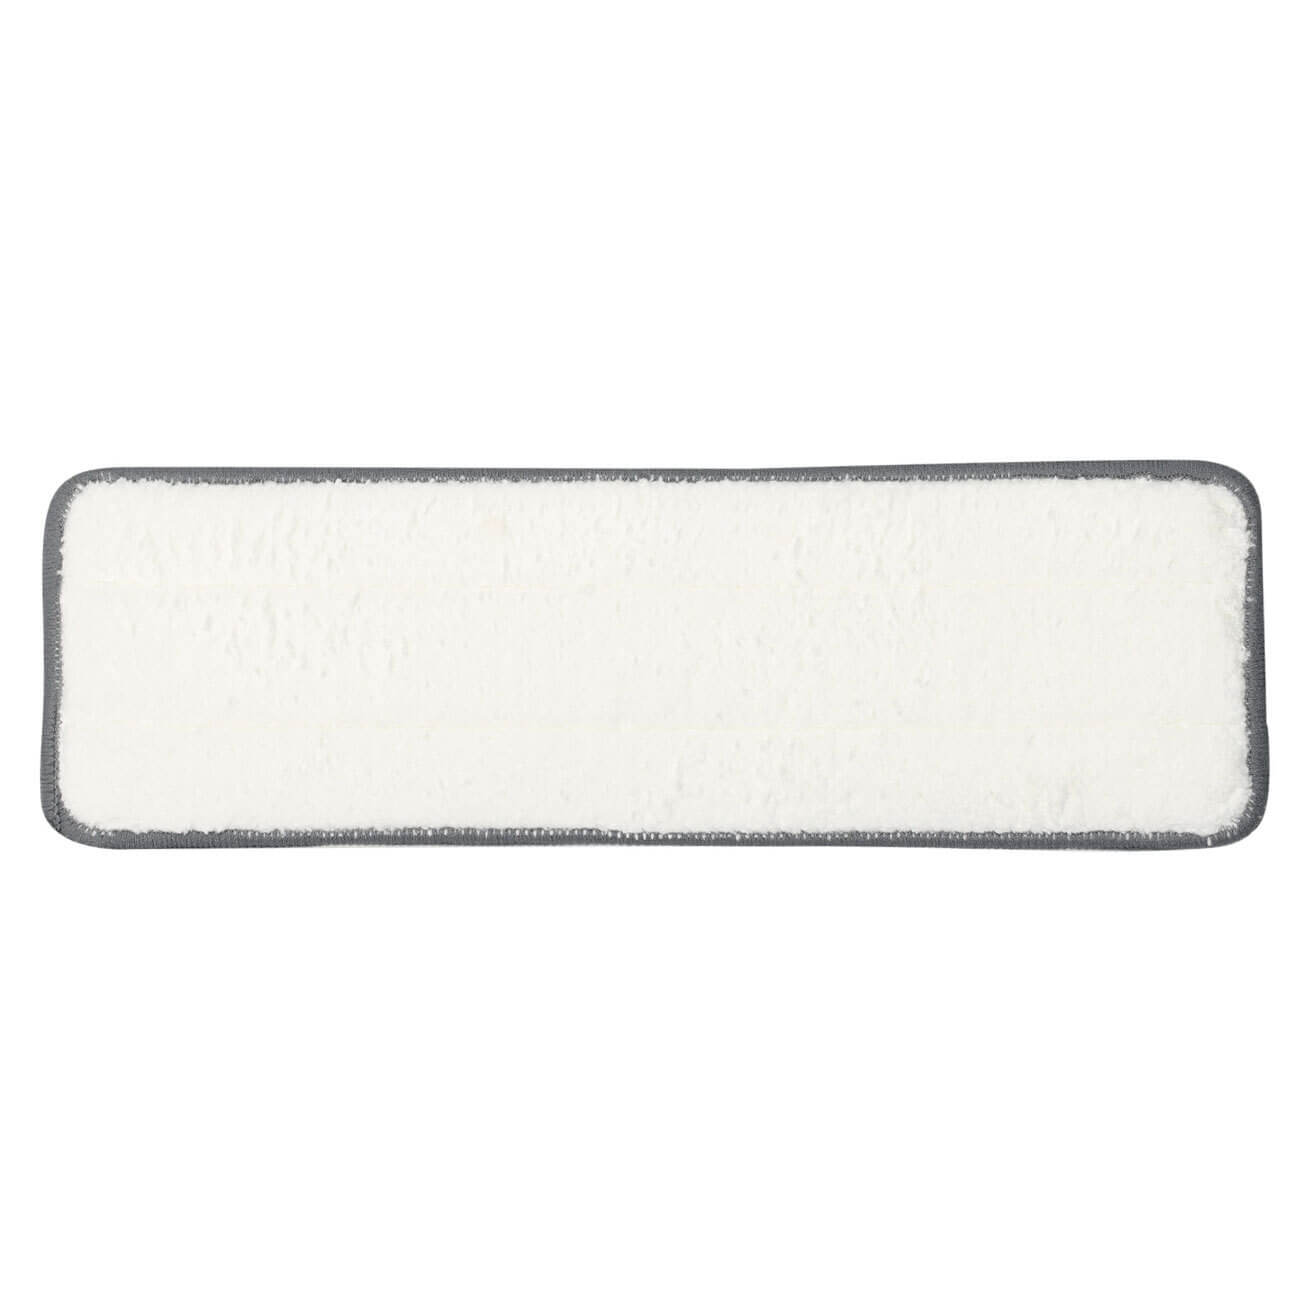 Тряпка для швабры УТ000048034 насадка для плоской швабры доляна 42×12 см 60 гр микрофибра цвет серый